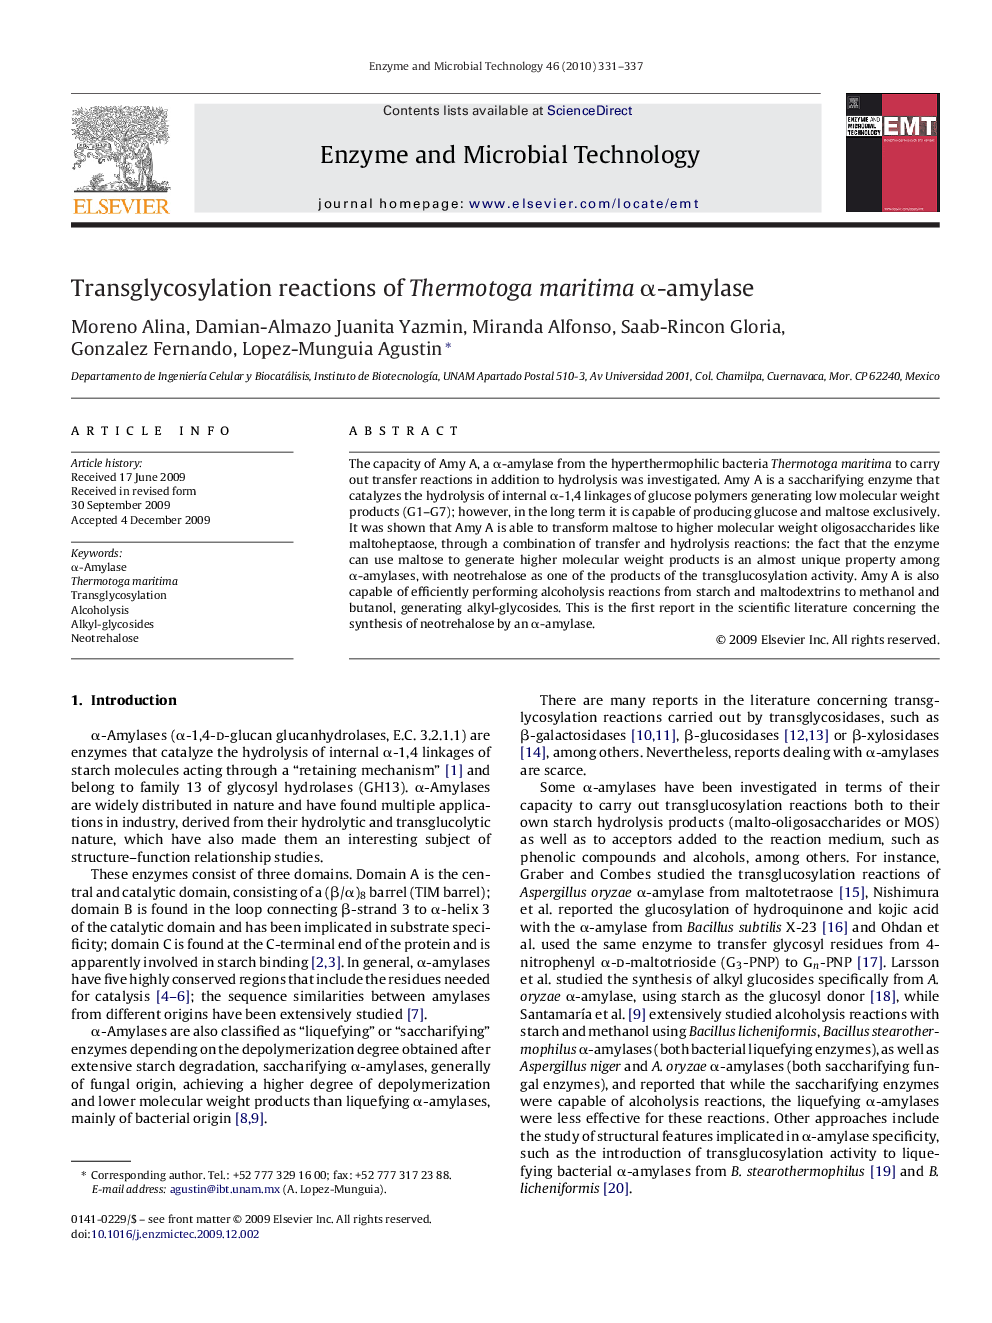 Transglycosylation reactions of Thermotoga maritima α-amylase